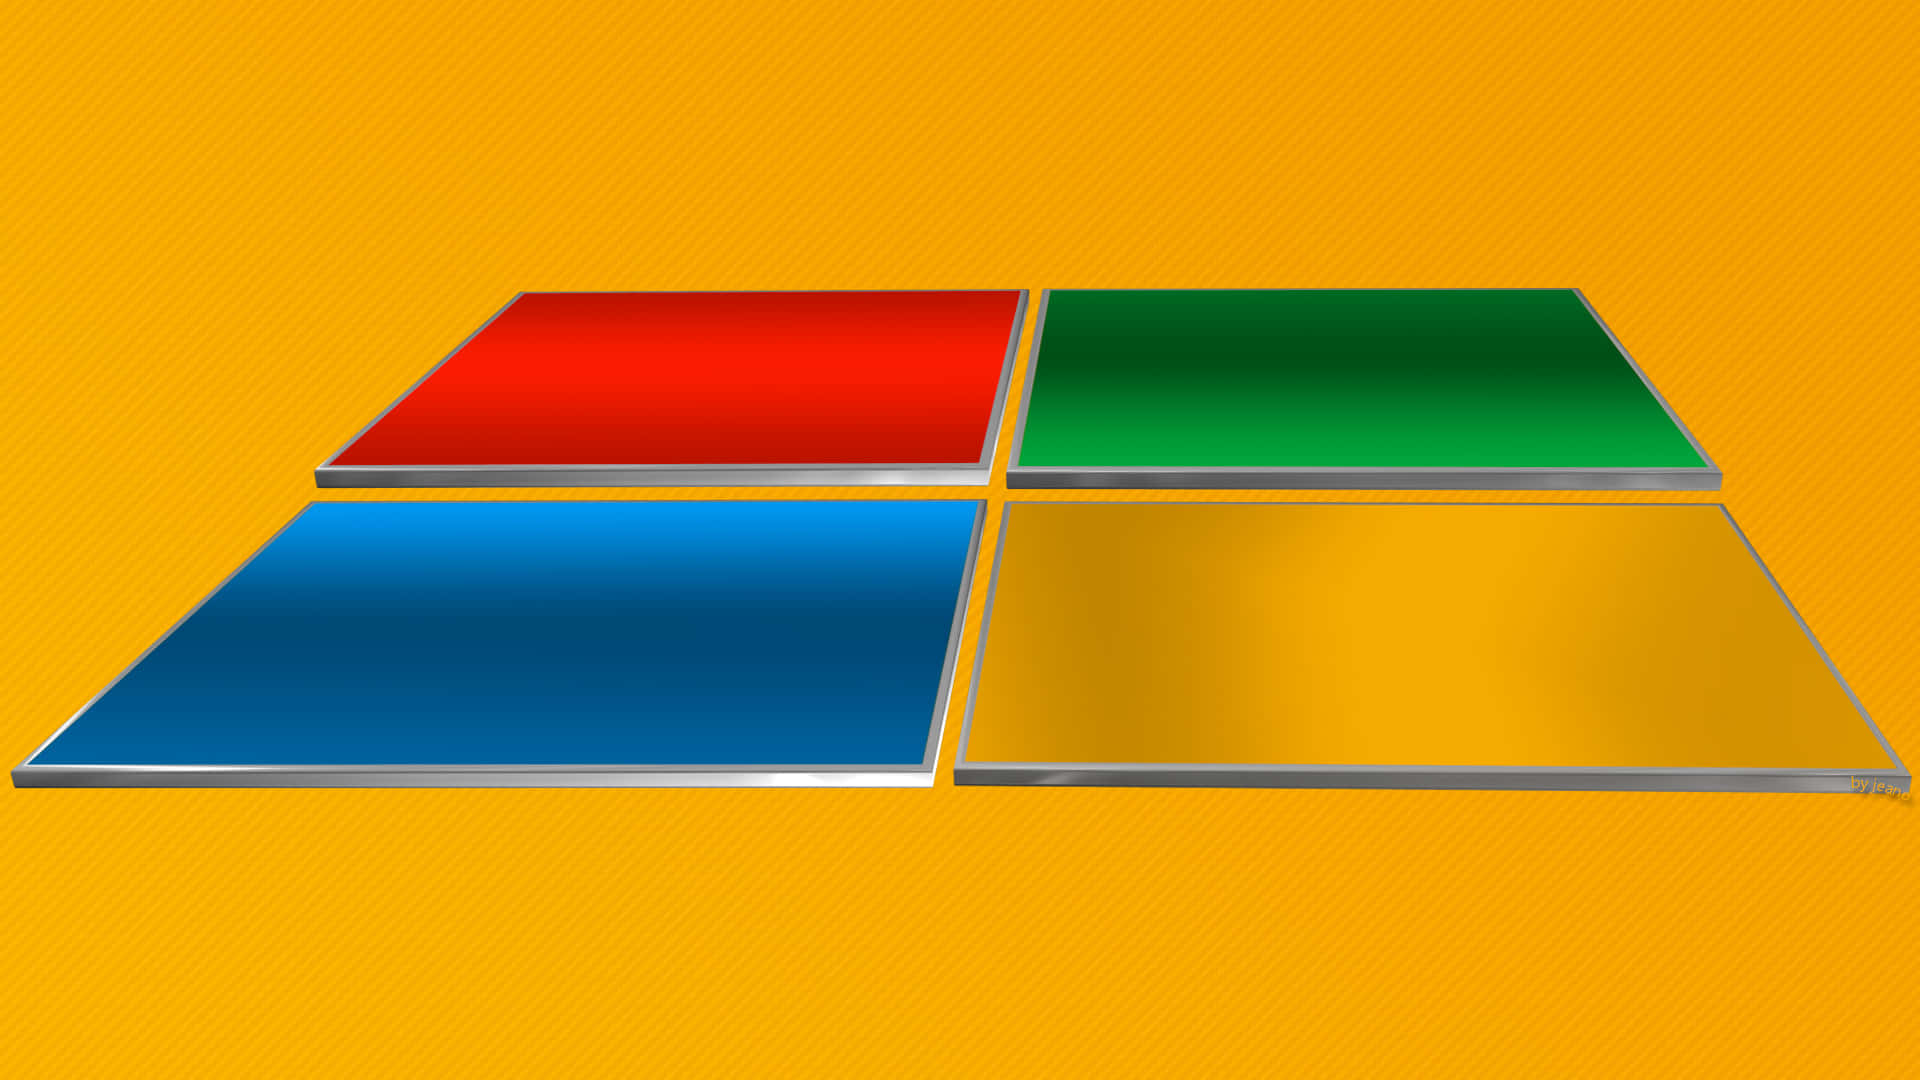 Microsoft Windows 8 Logo On A Yellow Background Background